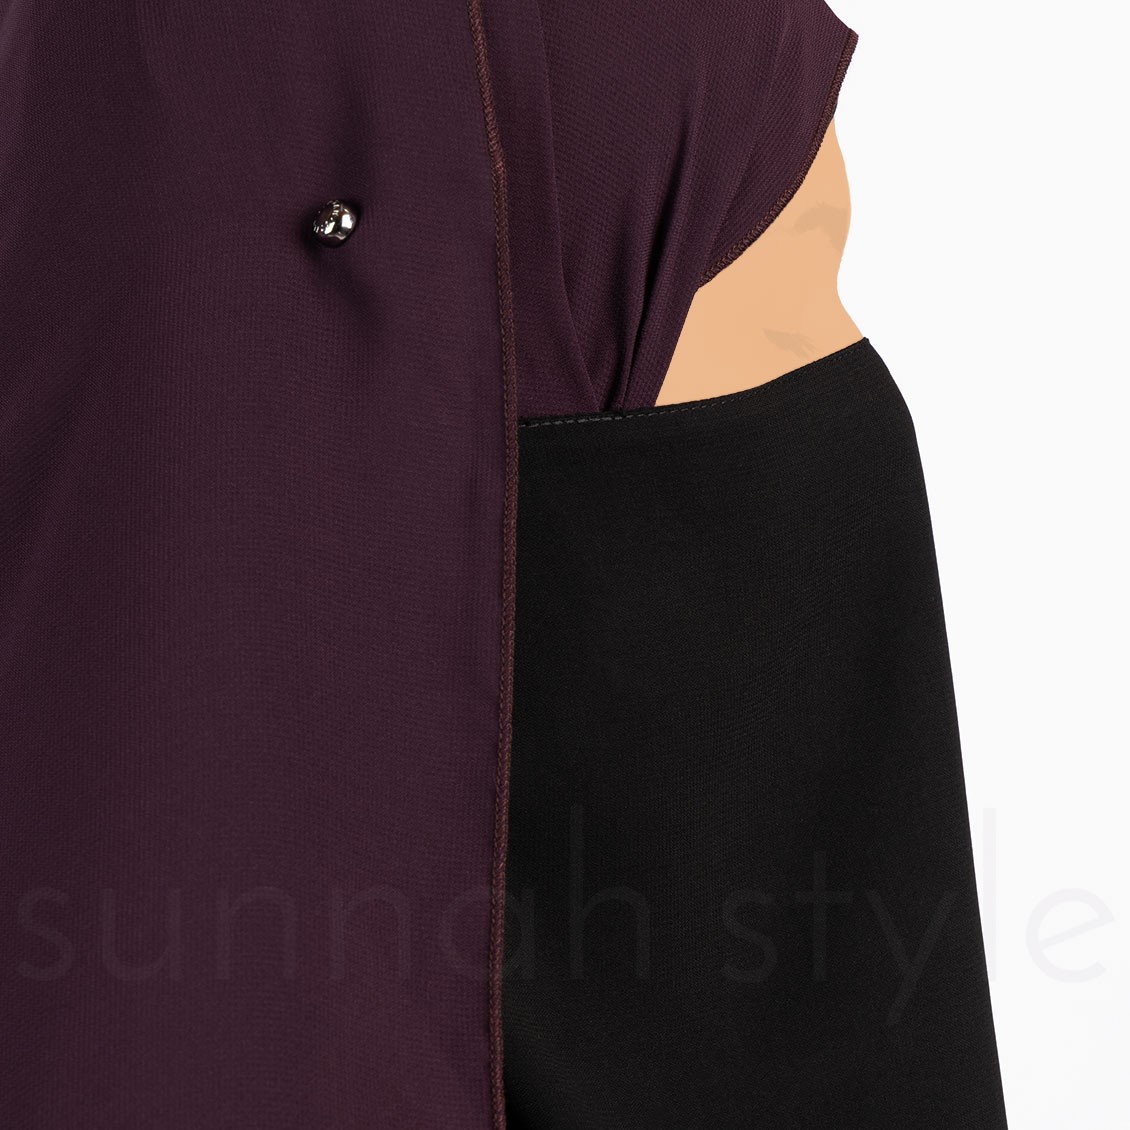 Sunnah Style Elastic Half Niqab Black